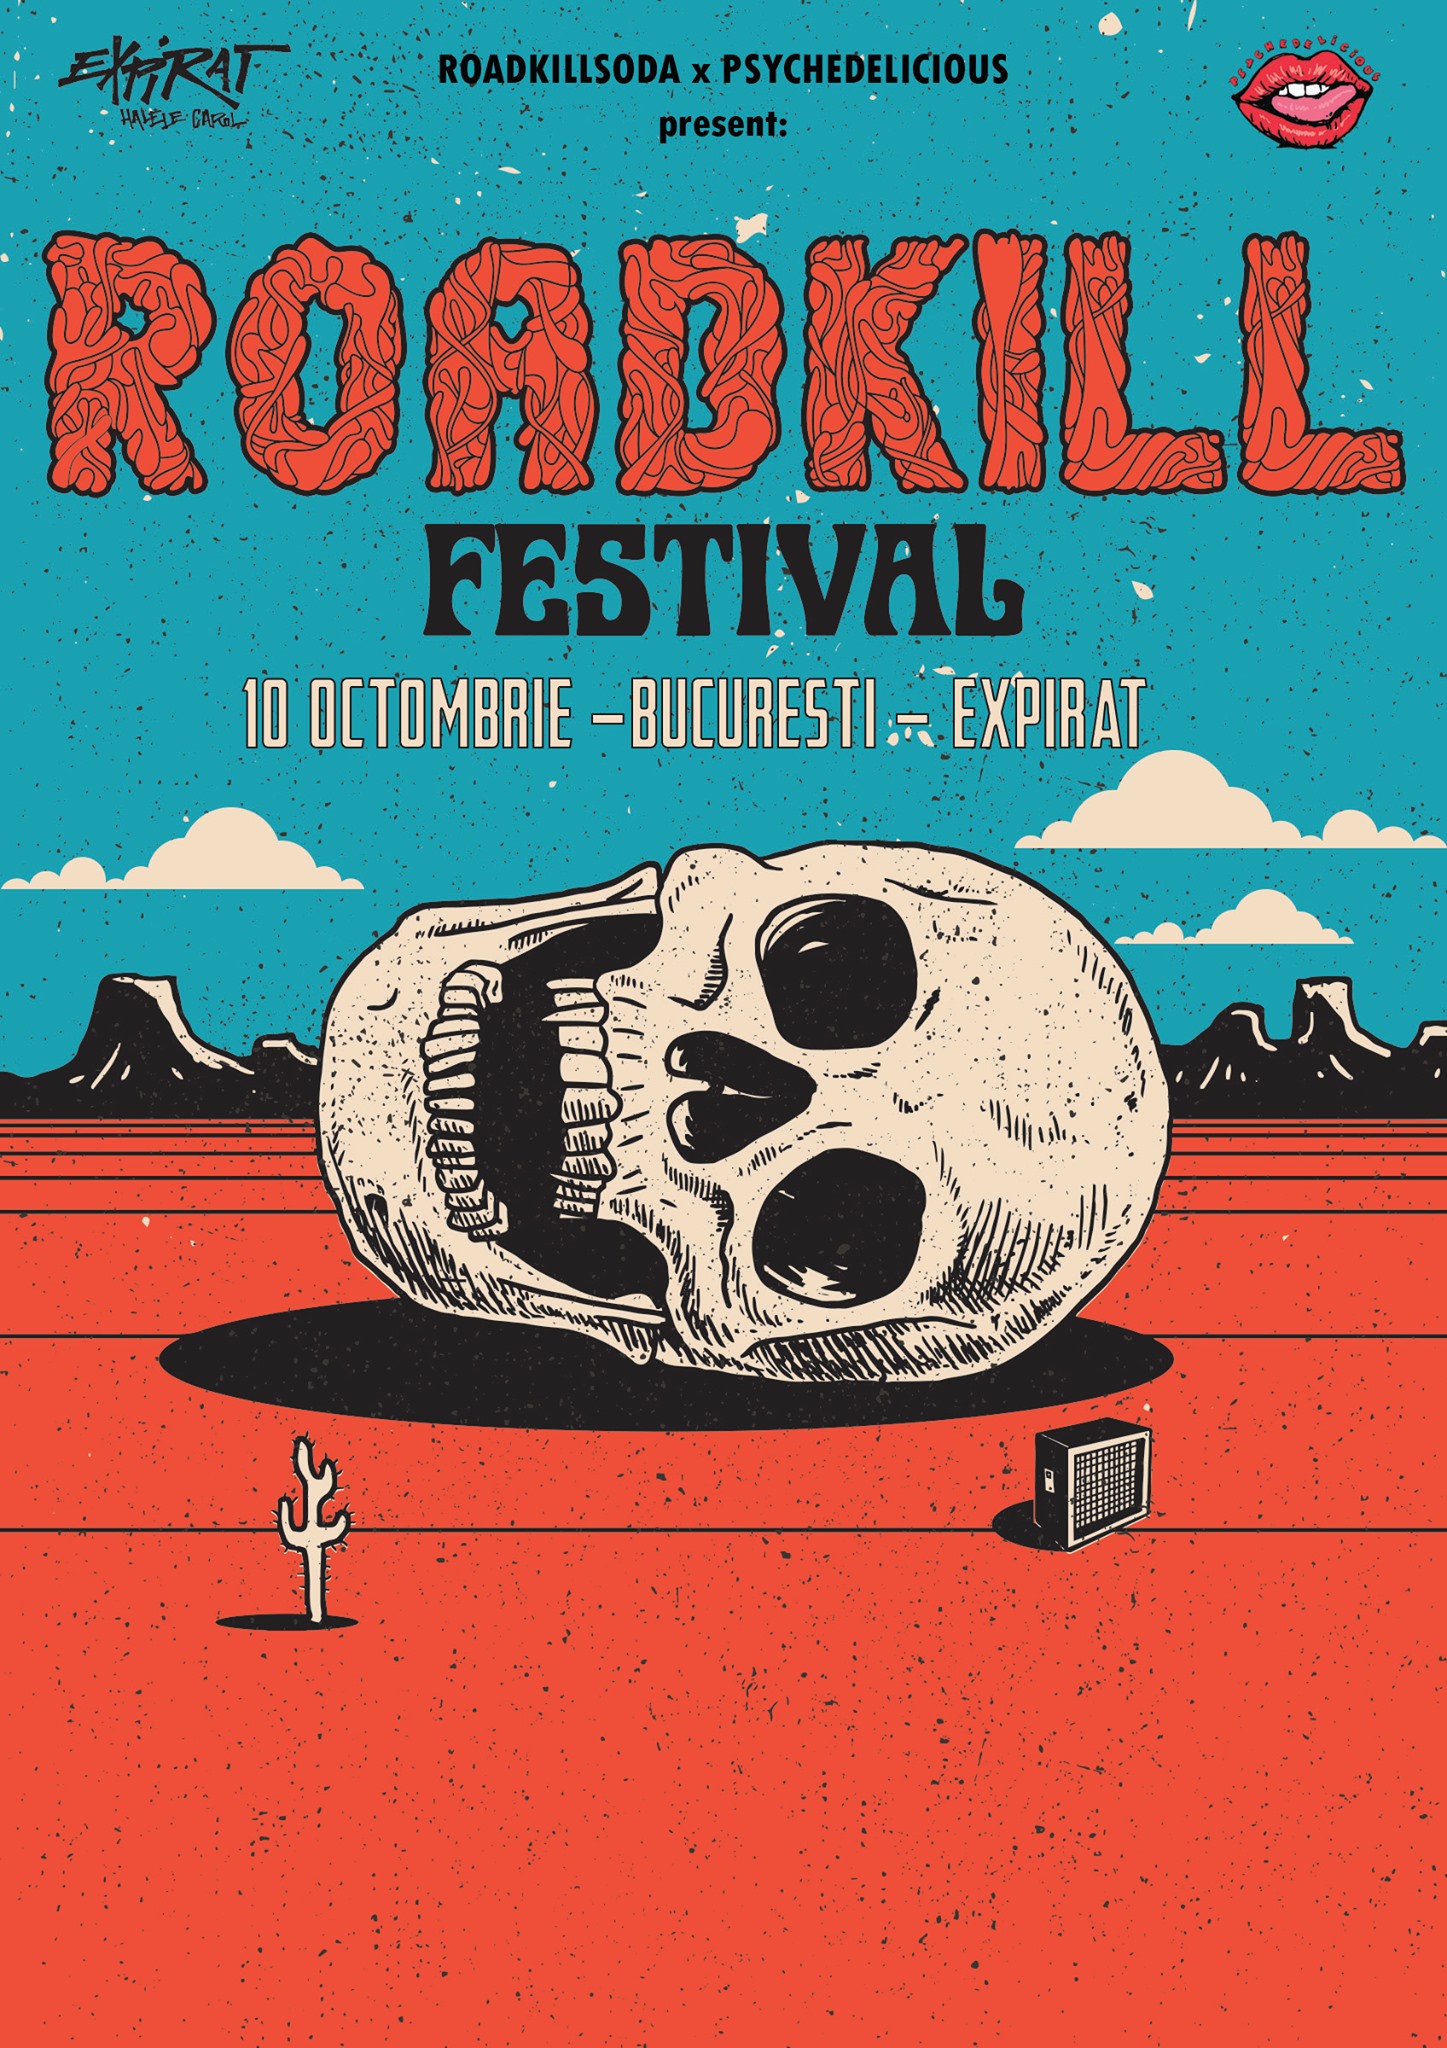 ROADKILL Festival • 2021 • 10.10 • Expirat